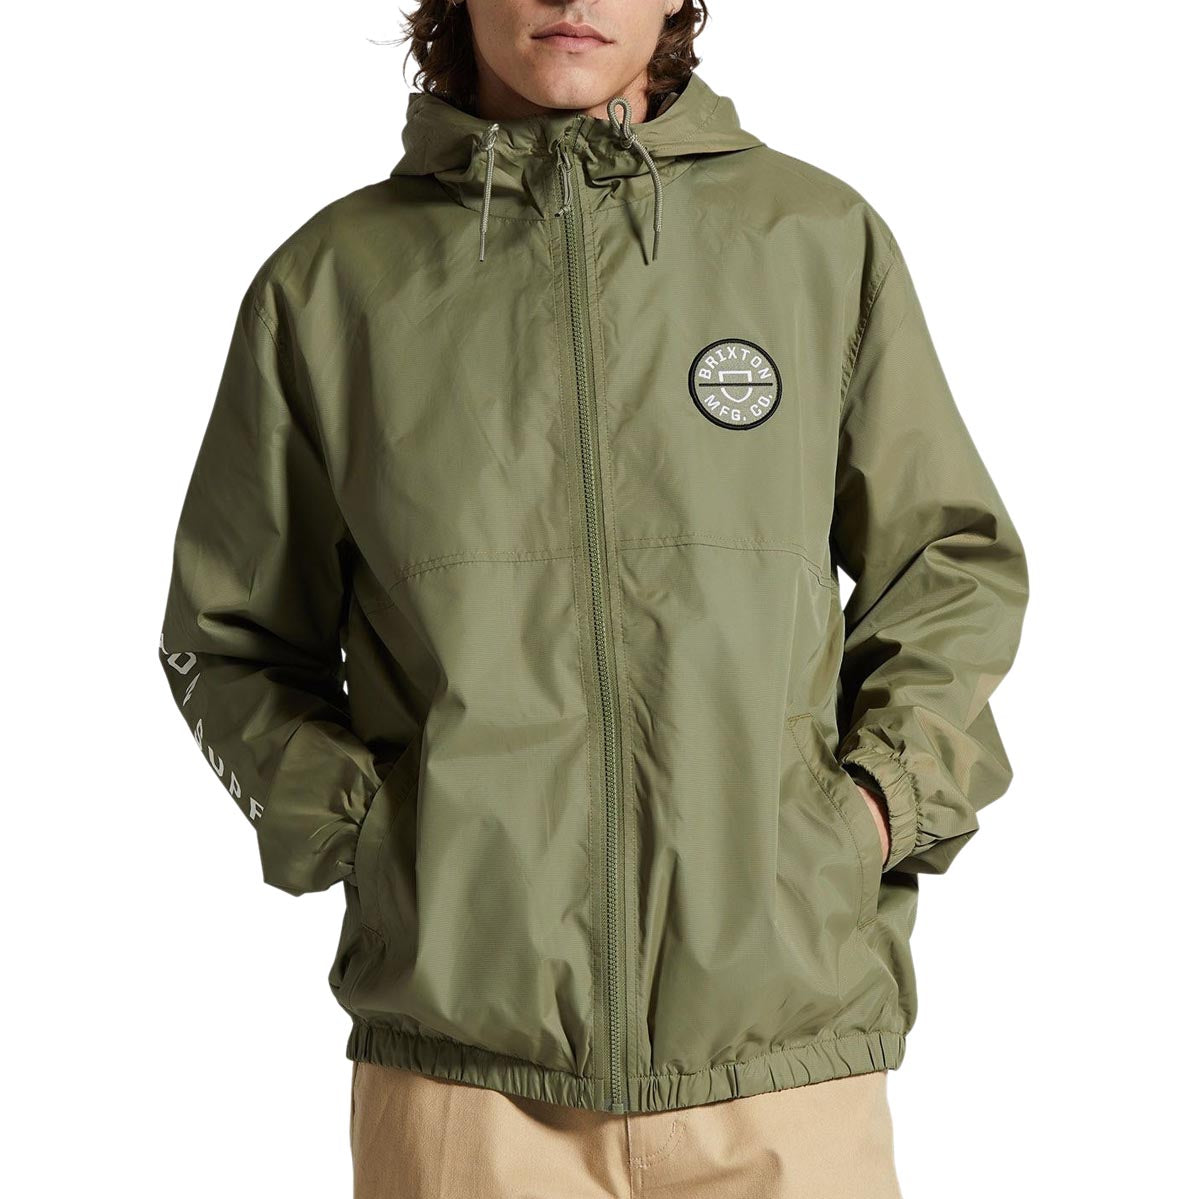 Brixton Claxton Crest Lw Zip Hooded Jacket - Olive Surplus image 1